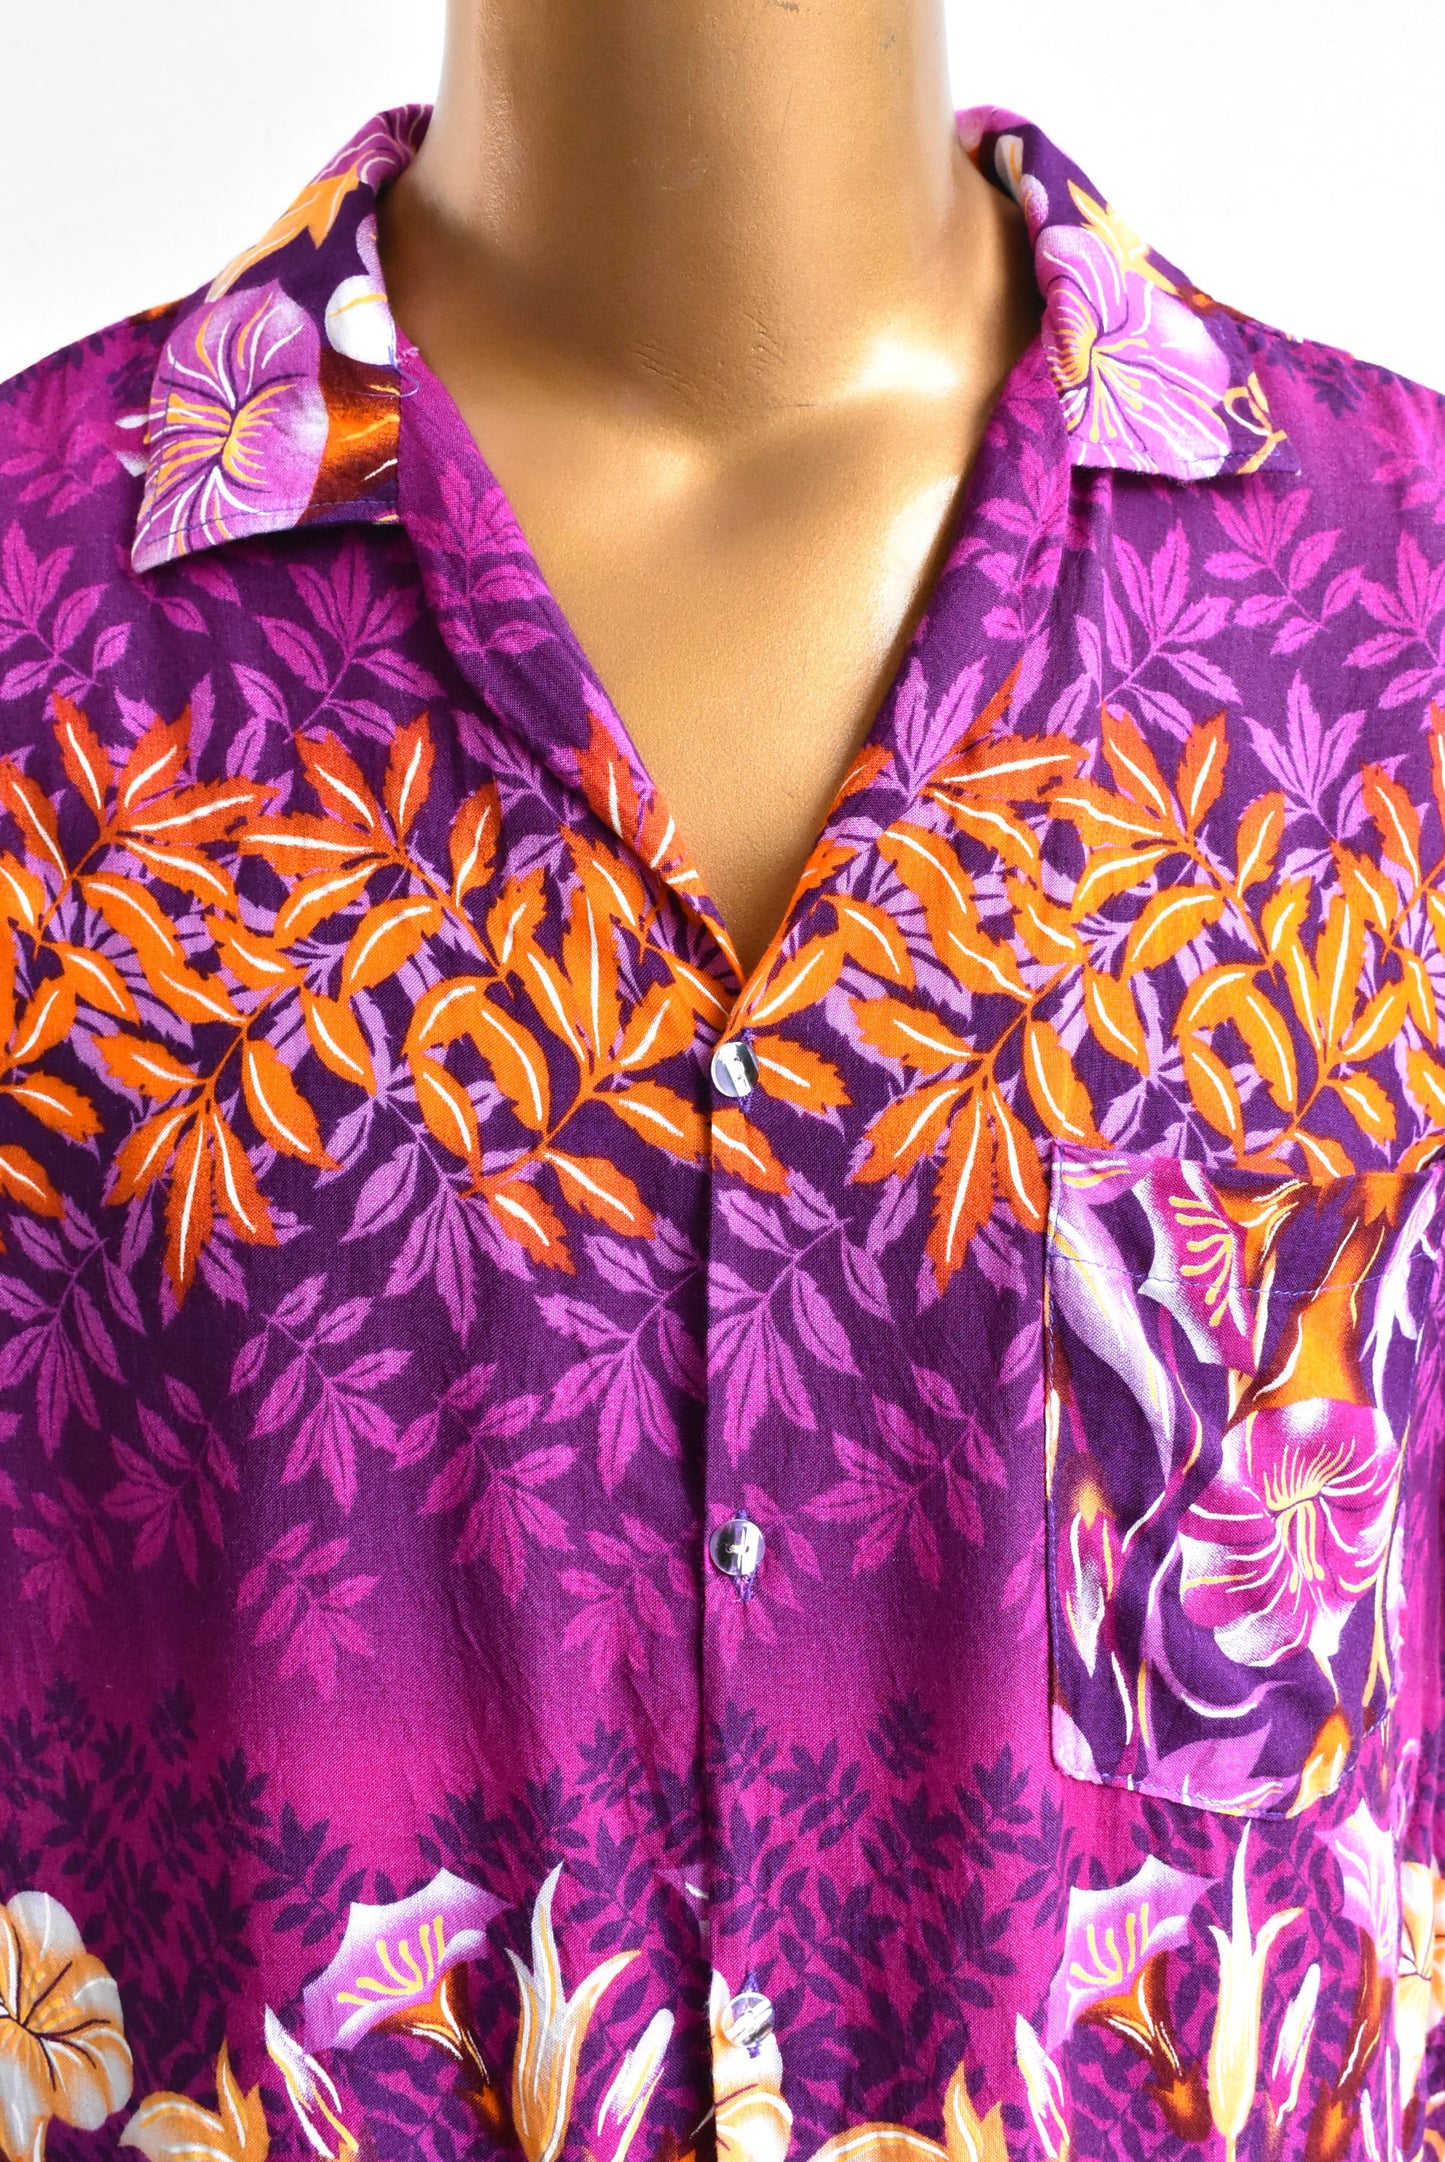 Blue Hawaii retro mens shirt, size M